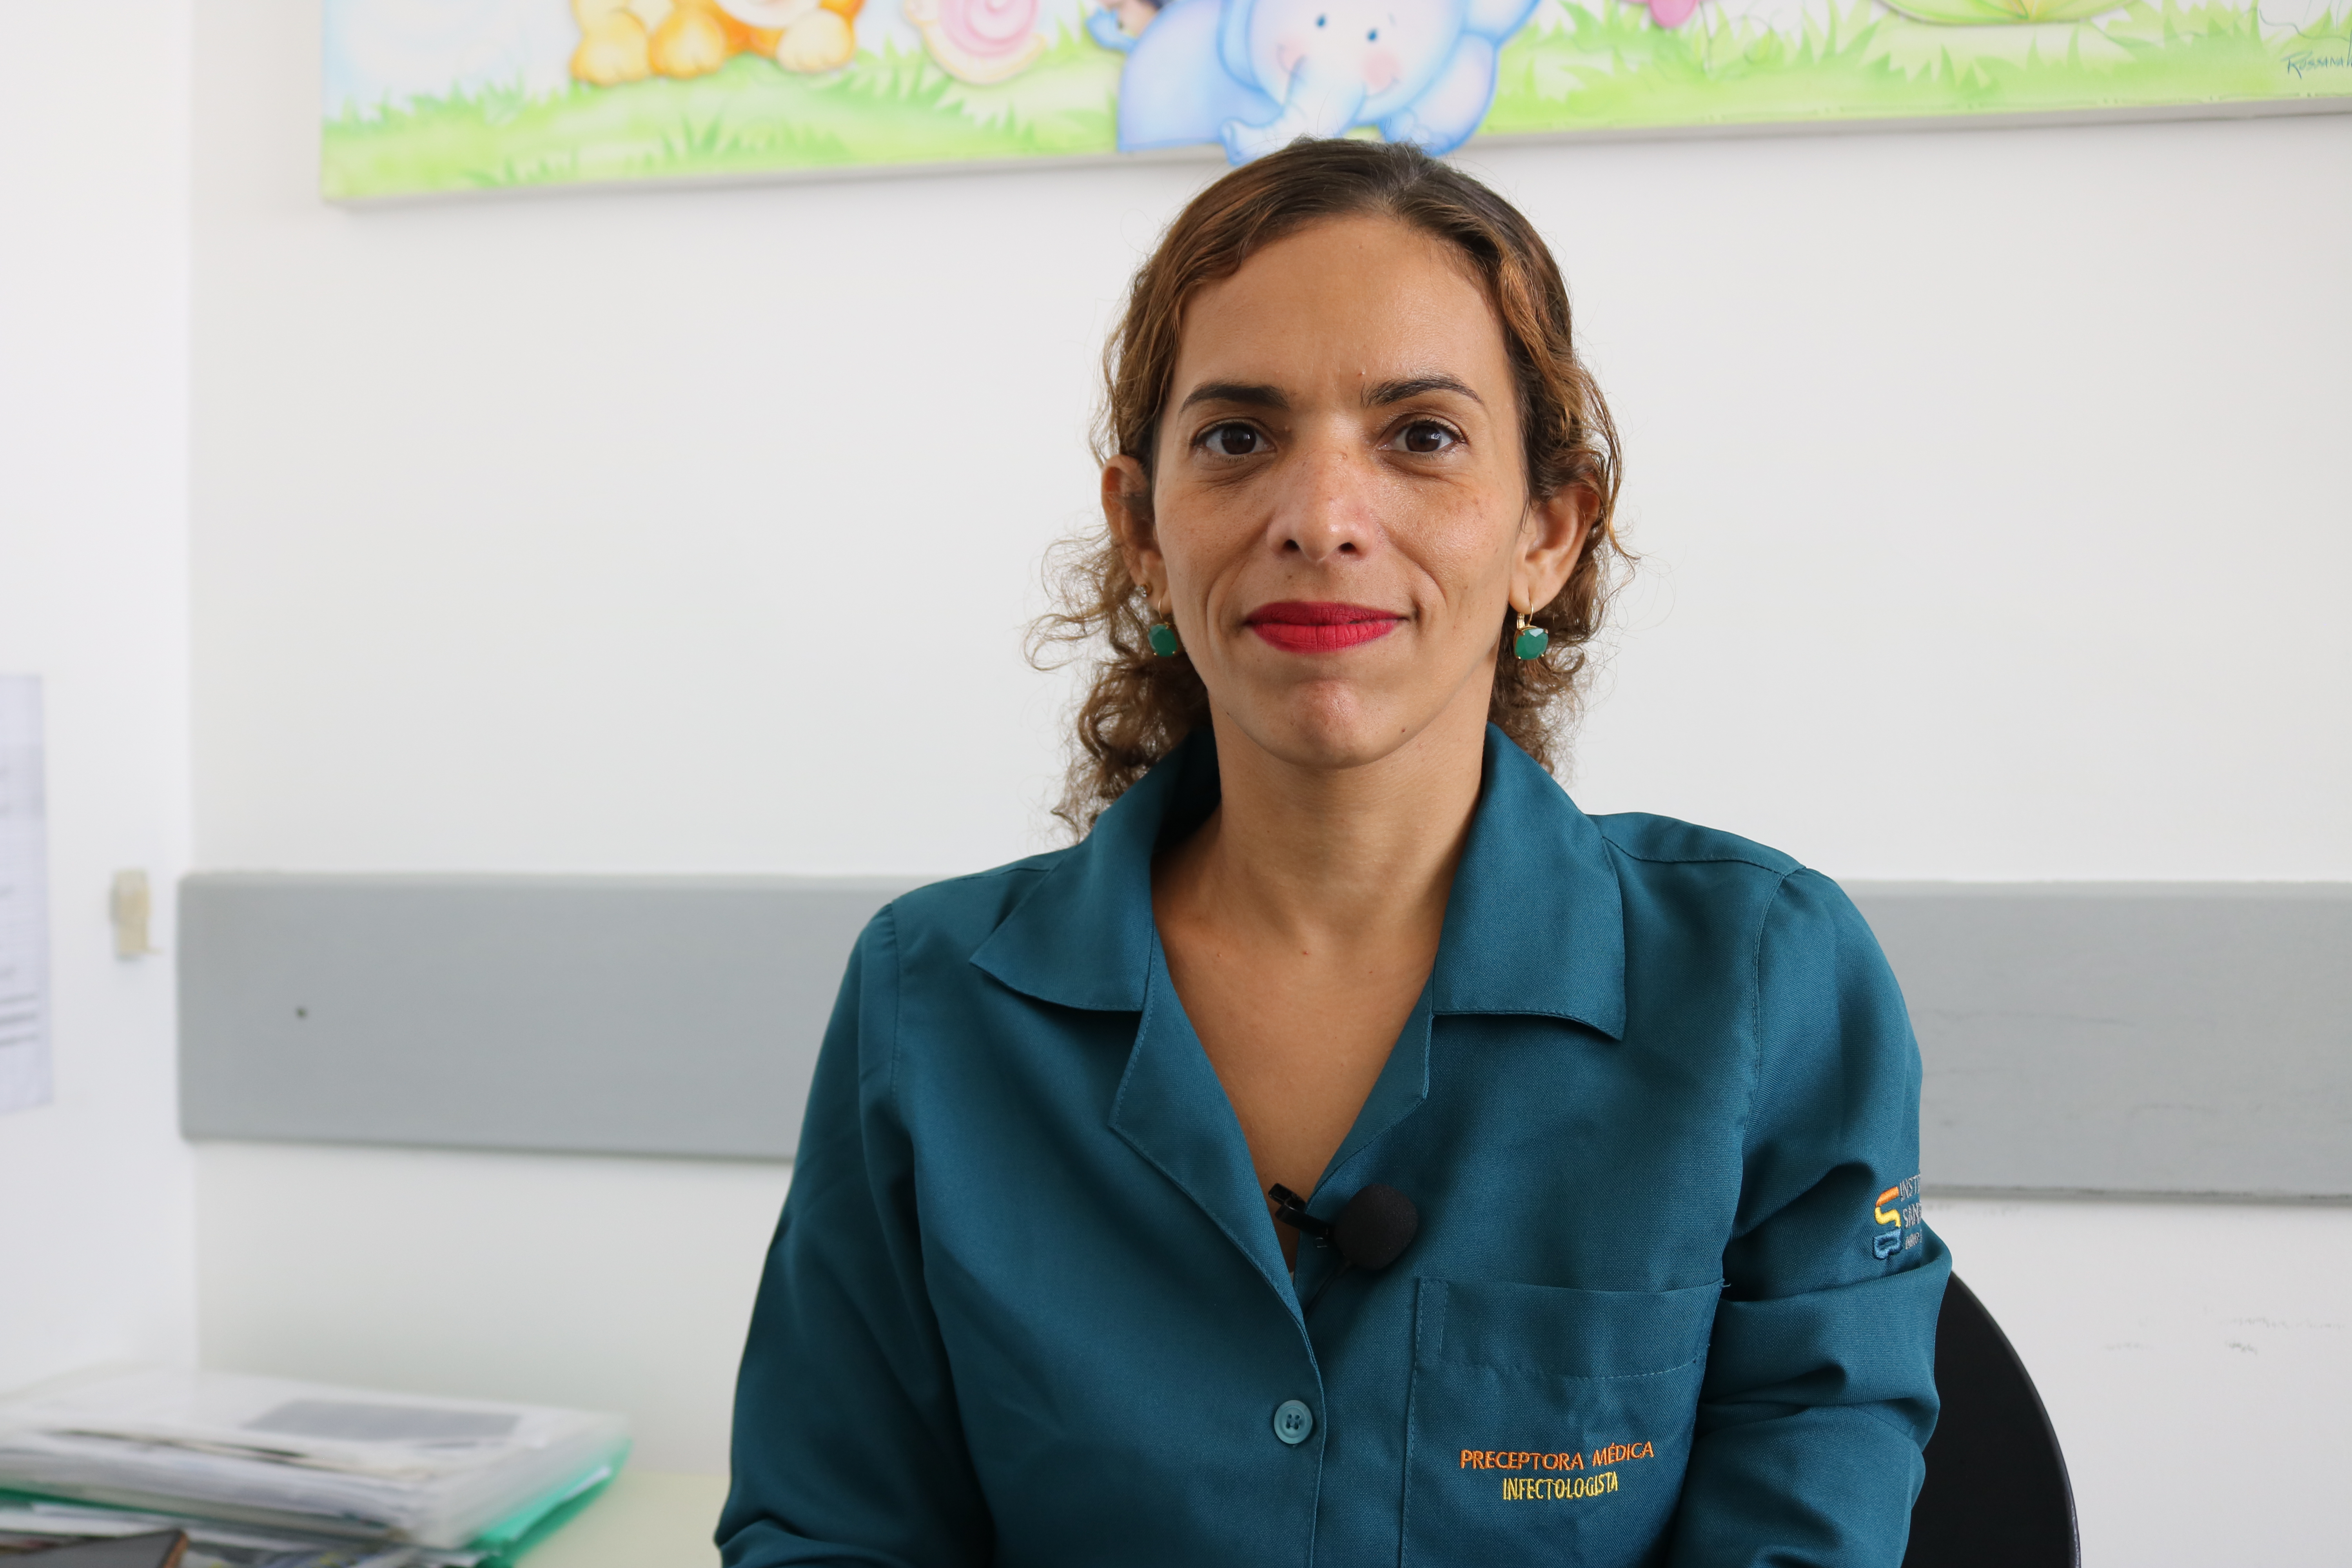 Carolina Damásio, infectologista do ISD _ Foto ASCOM ISD